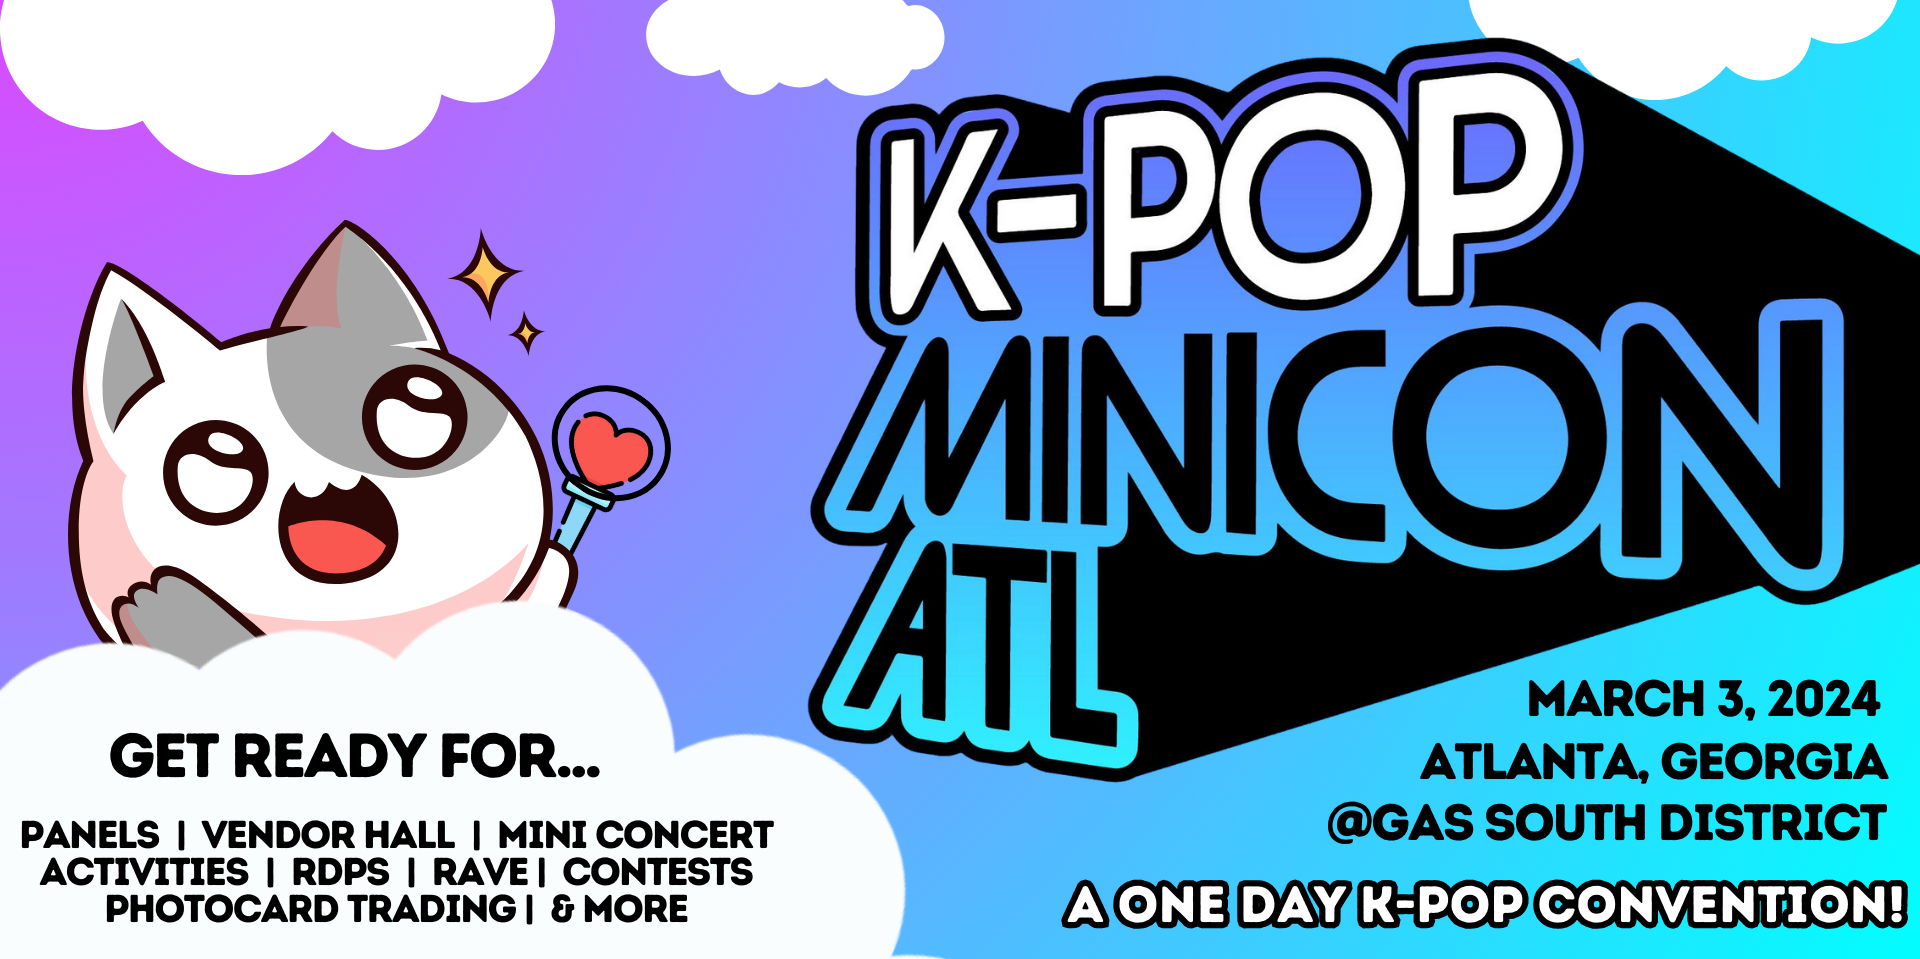 K-pop Minicon promotional image